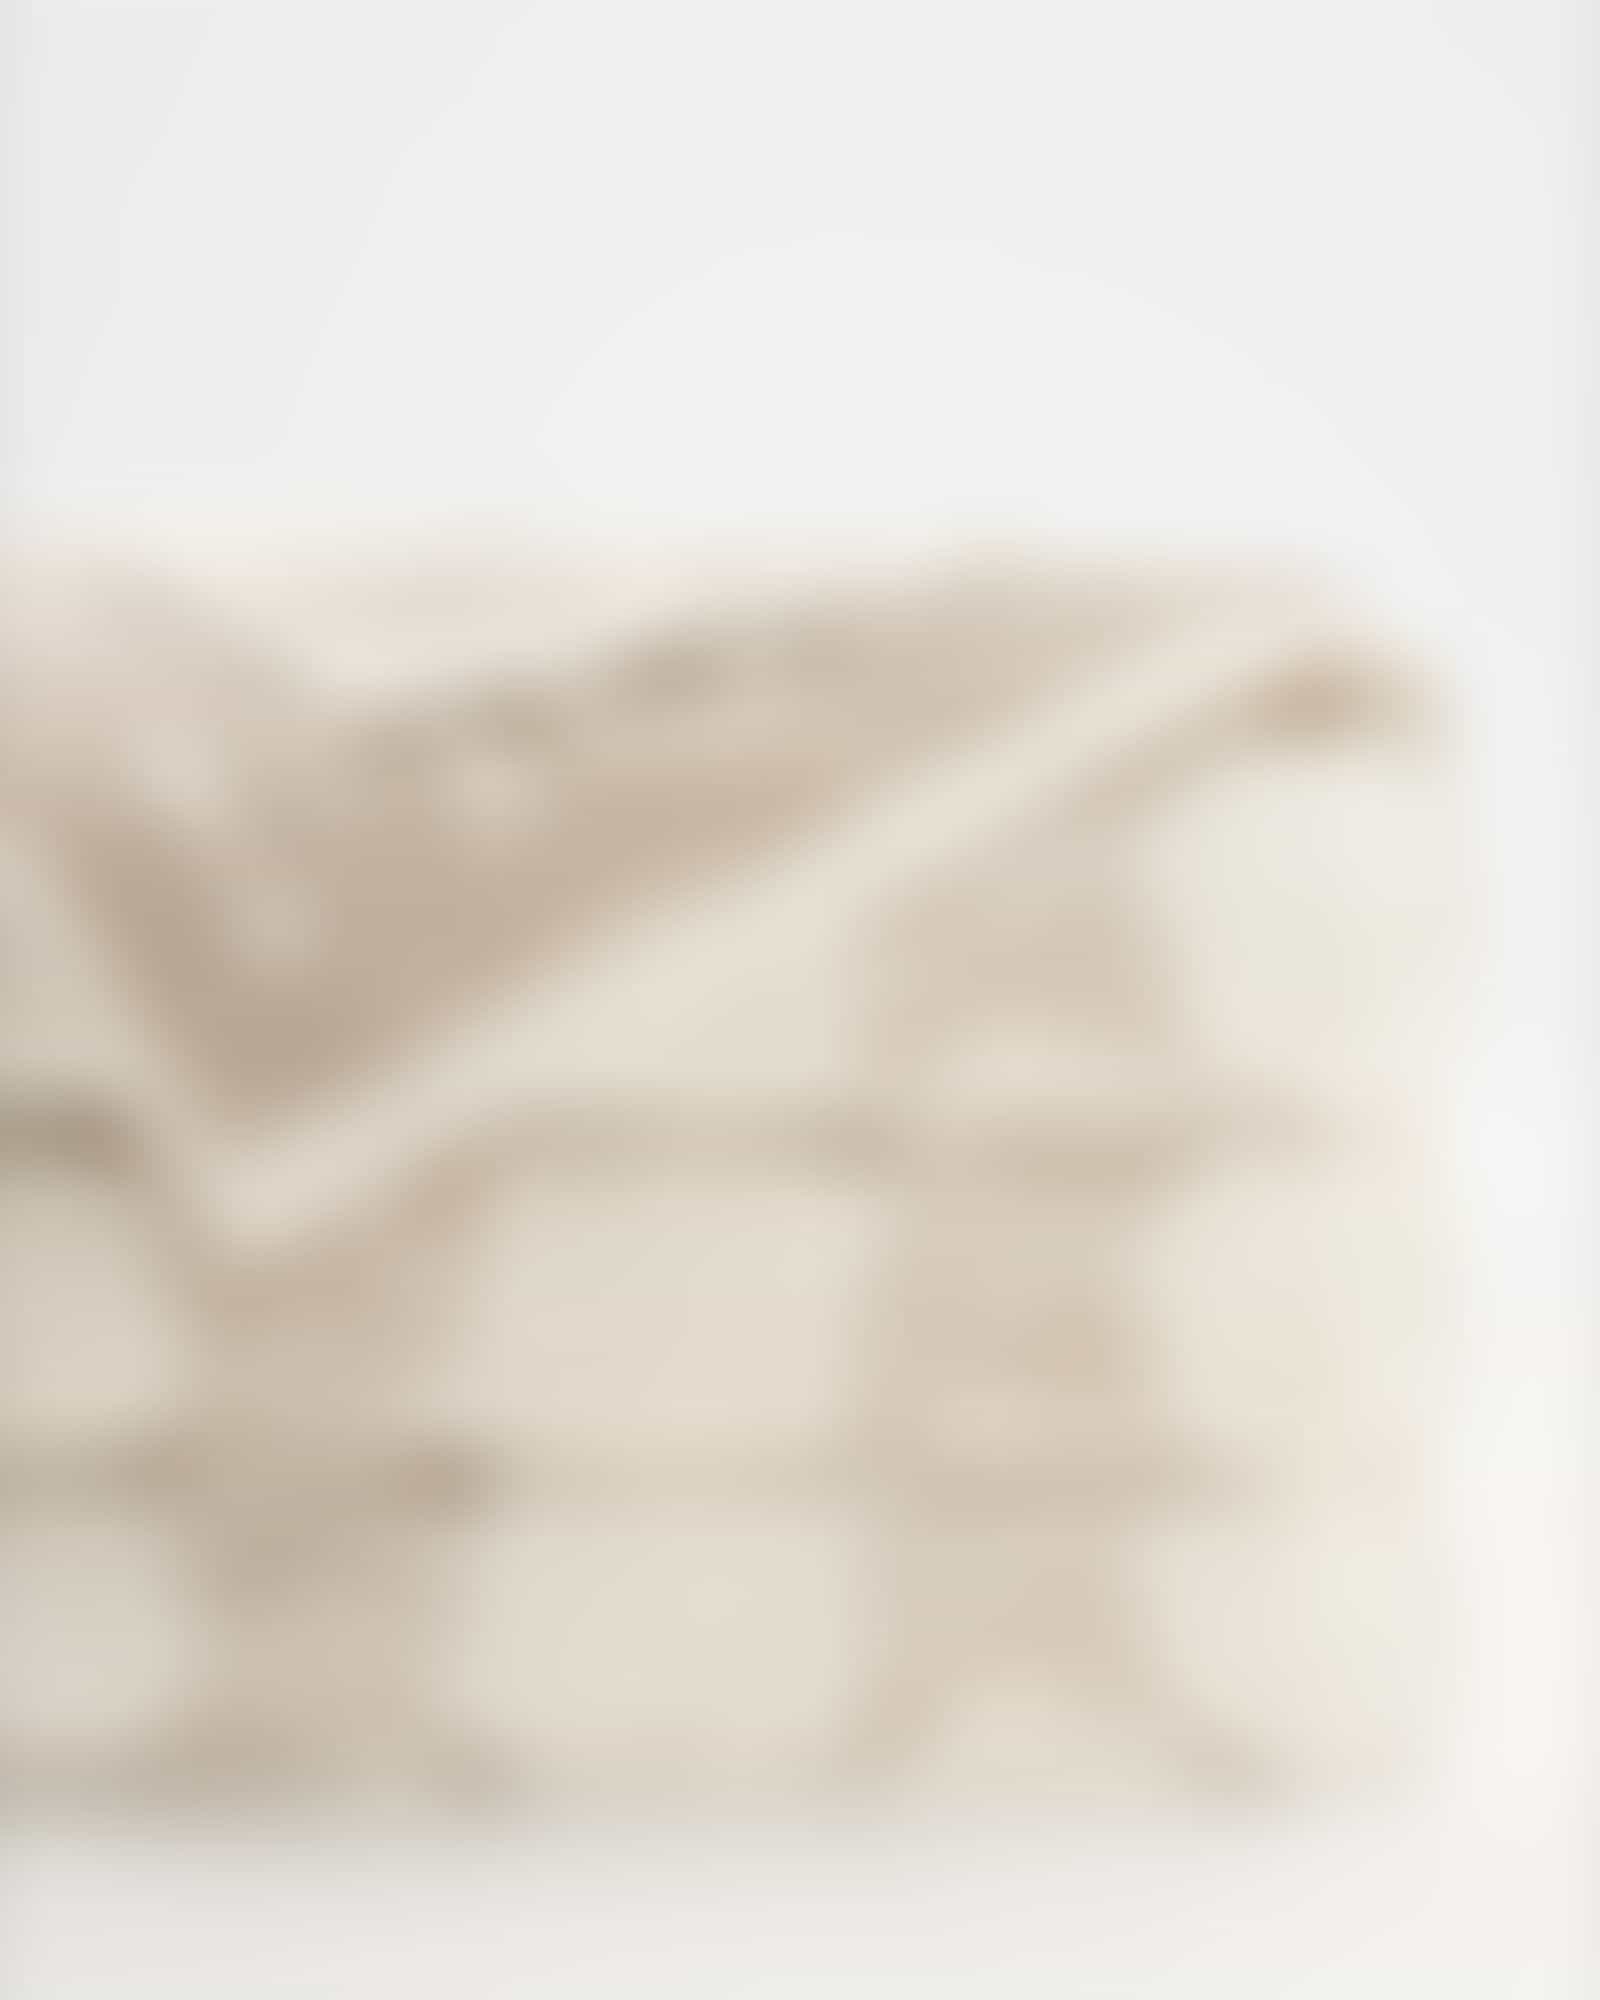 JOOP! Classic - Cornflower 1611 - Farbe: Creme - 36 - Saunatuch 80x200 cm